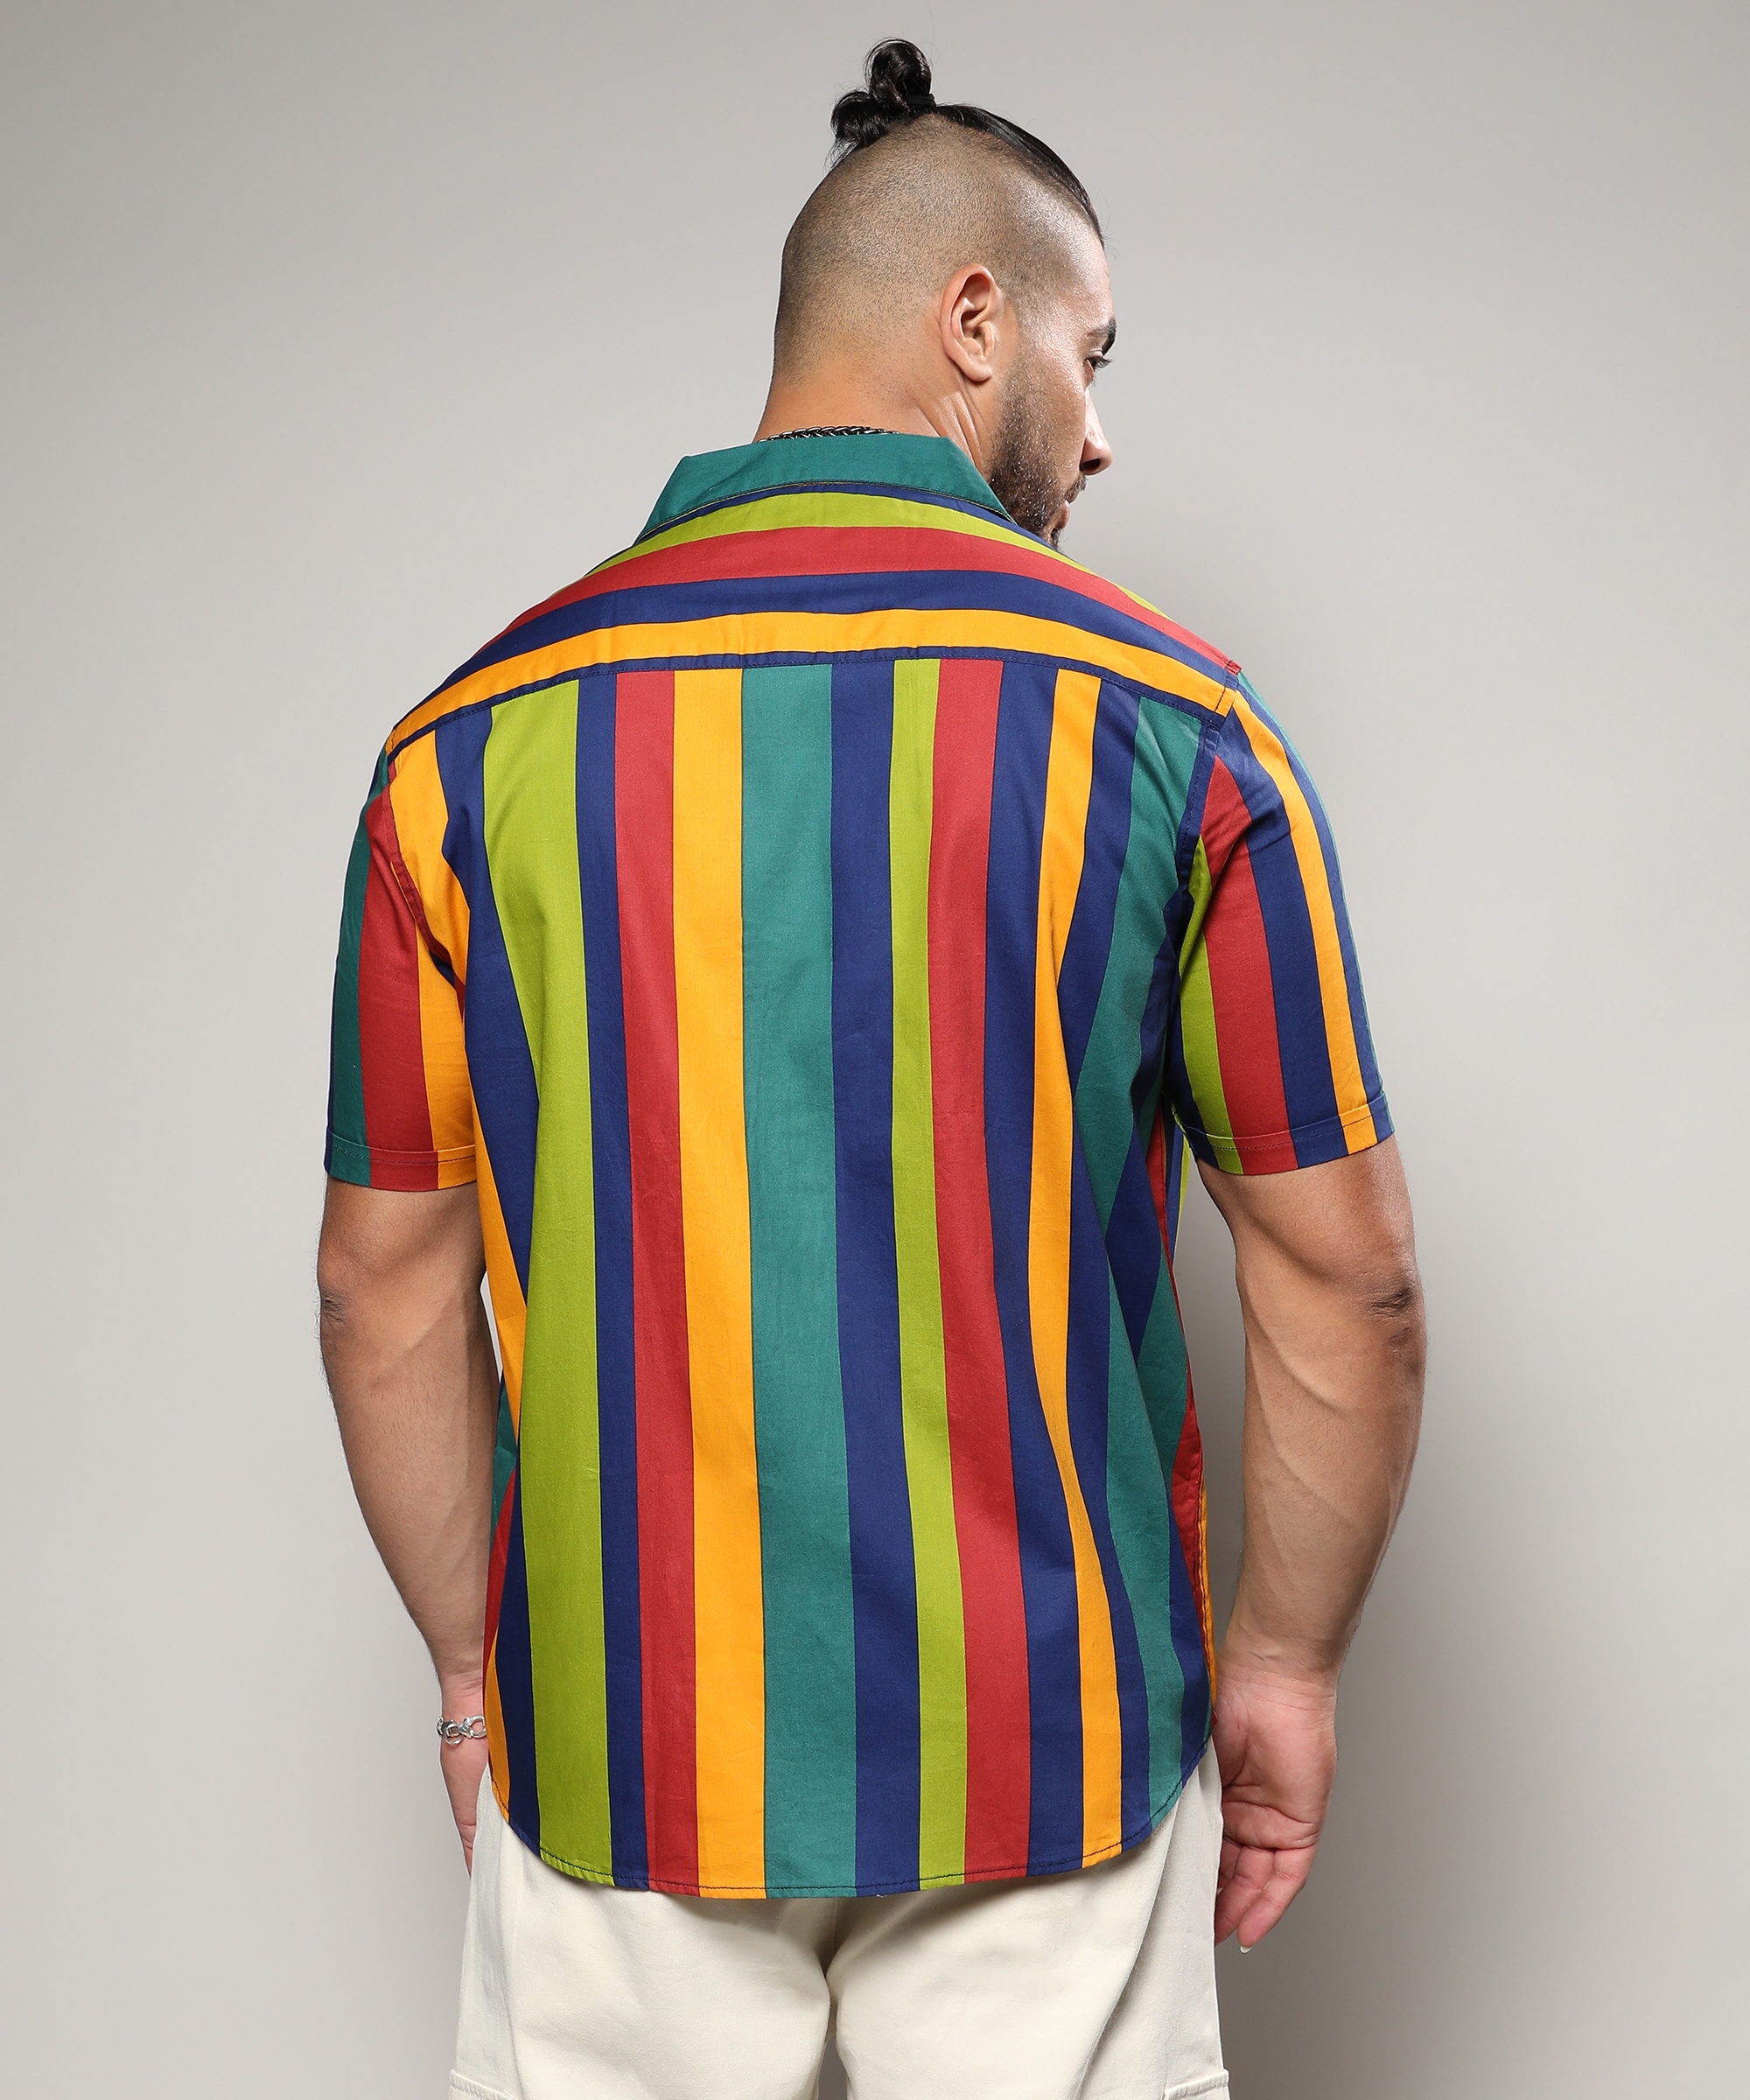 Instafab Plus | Men's Multicolour Awning Striped Shirt